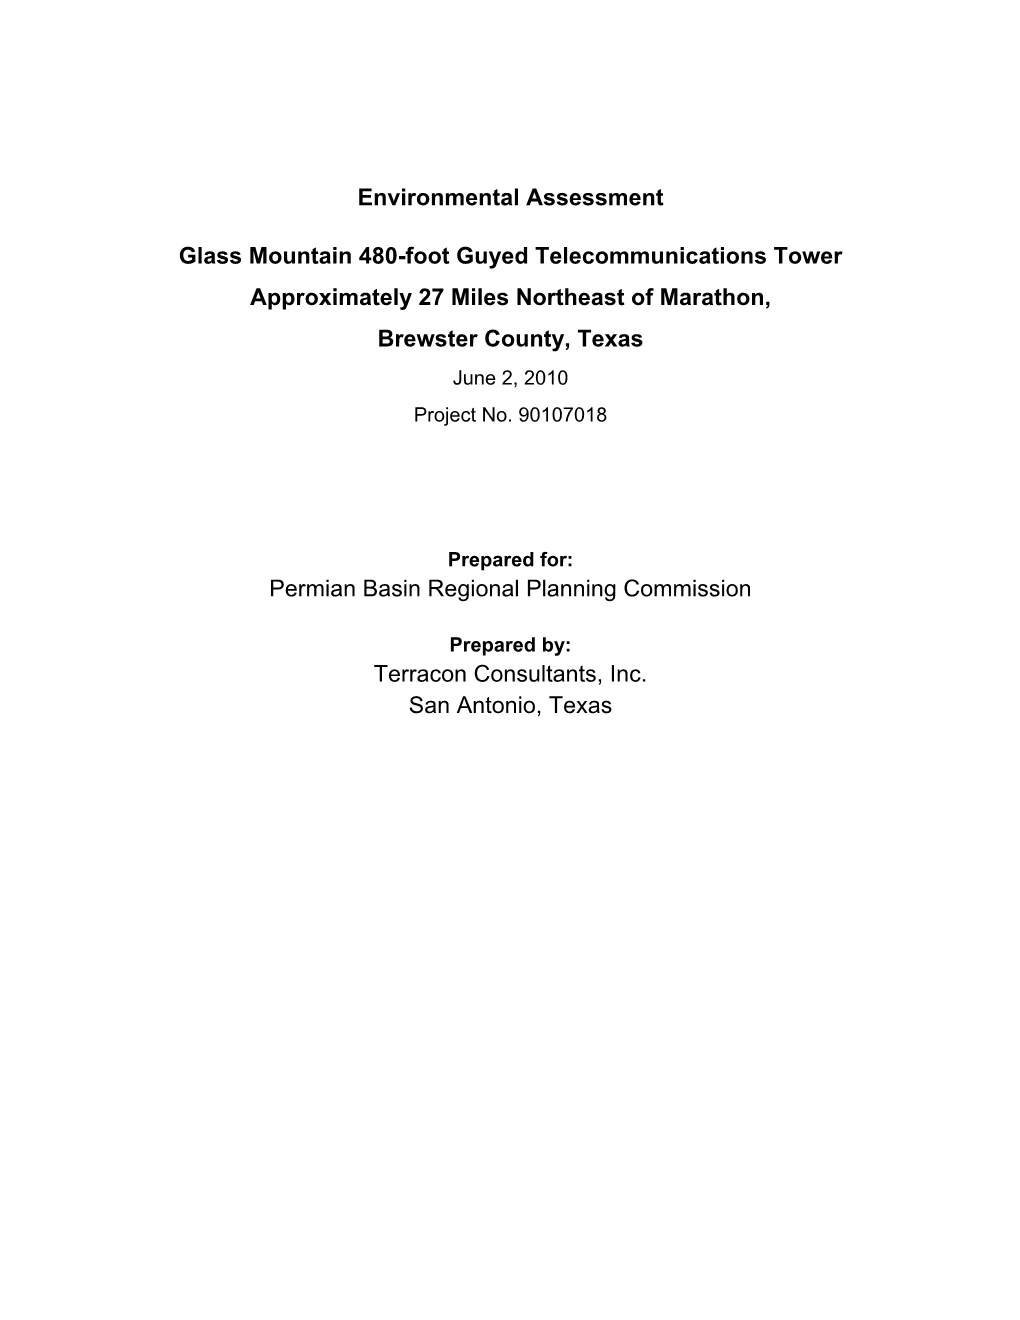 Environmental Assessment Glass Mountain 480-Foot Guyed